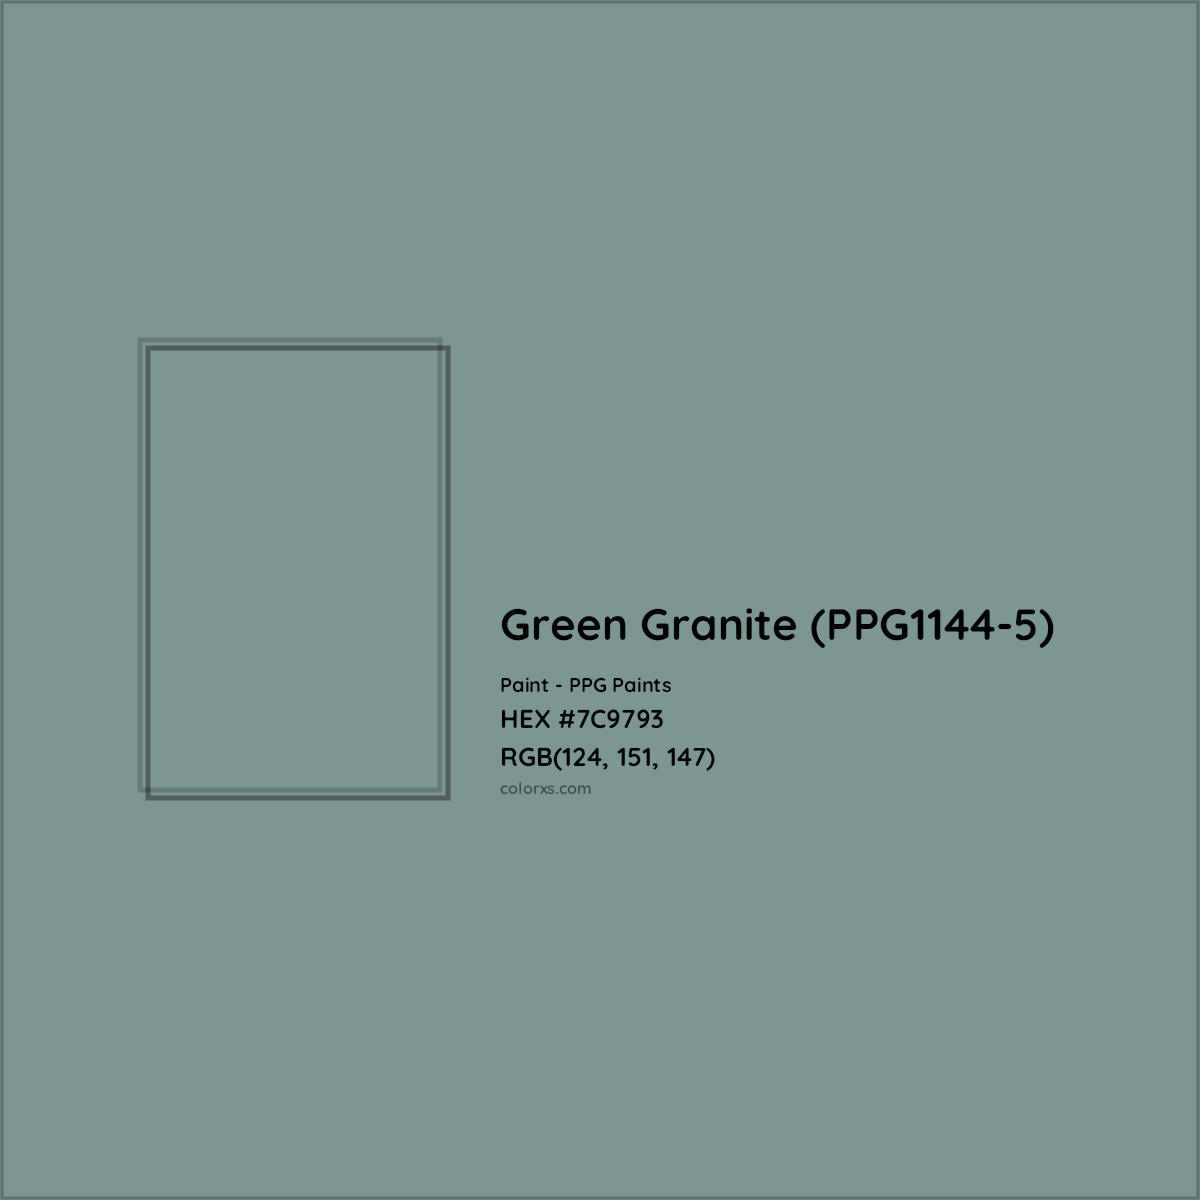 HEX #7C9793 Green Granite (PPG1144-5) Paint PPG Paints - Color Code